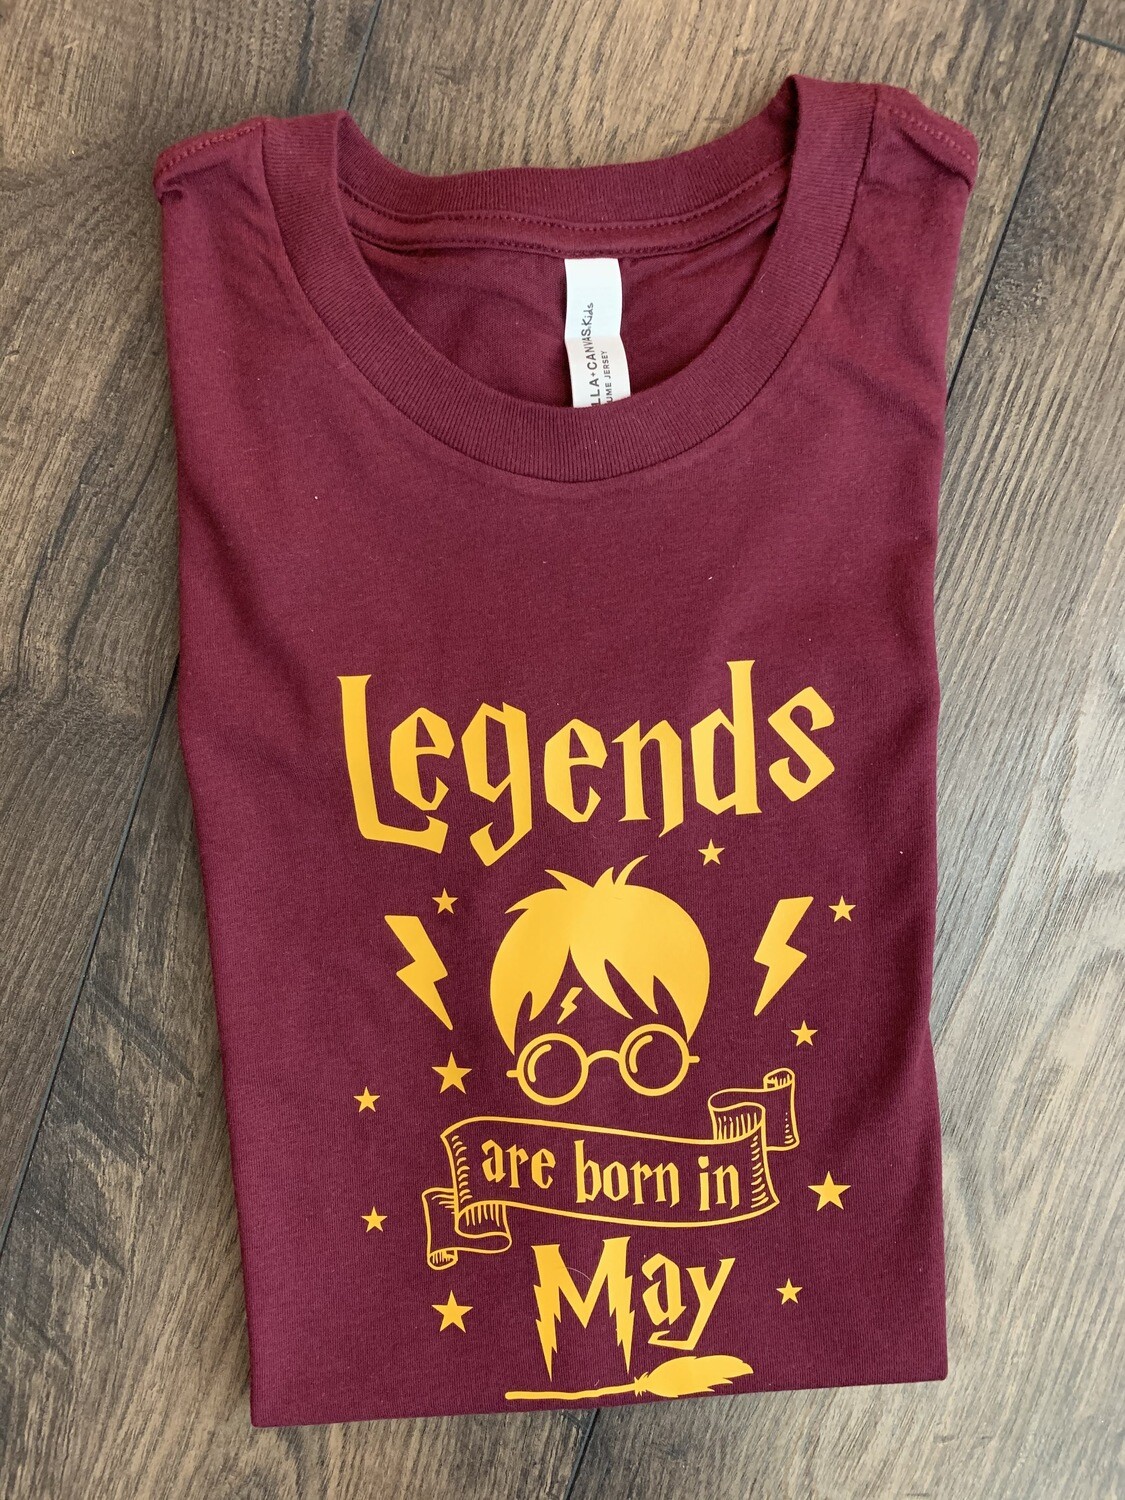 Harry Potter Legends Are Born Birthday Shirt